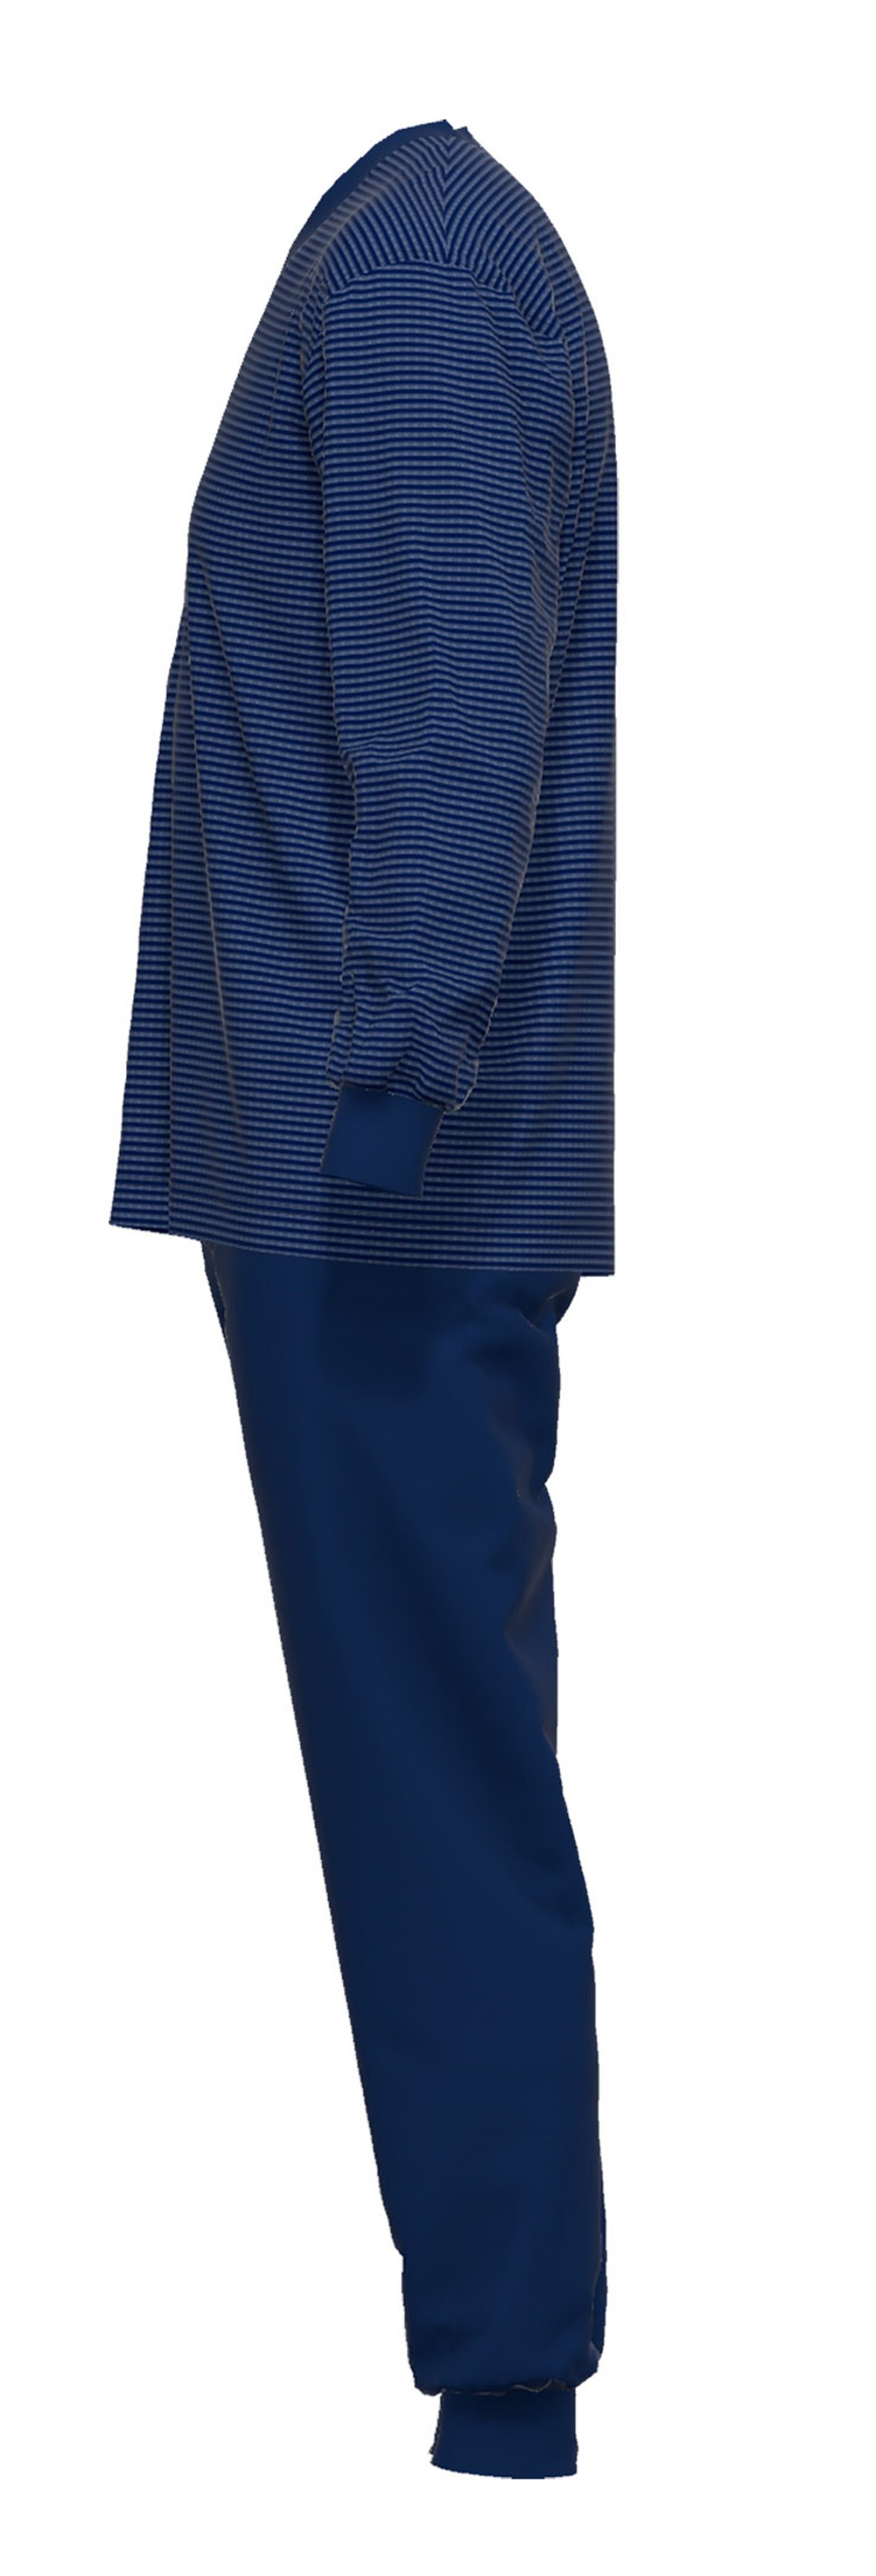 Götzburg blau Klima | Pyjama Herren Aktiv Bügelfrei tlg) Schlafanzug blau-dunkel-ringel GÖTZBURG Aktiv (2 Klima